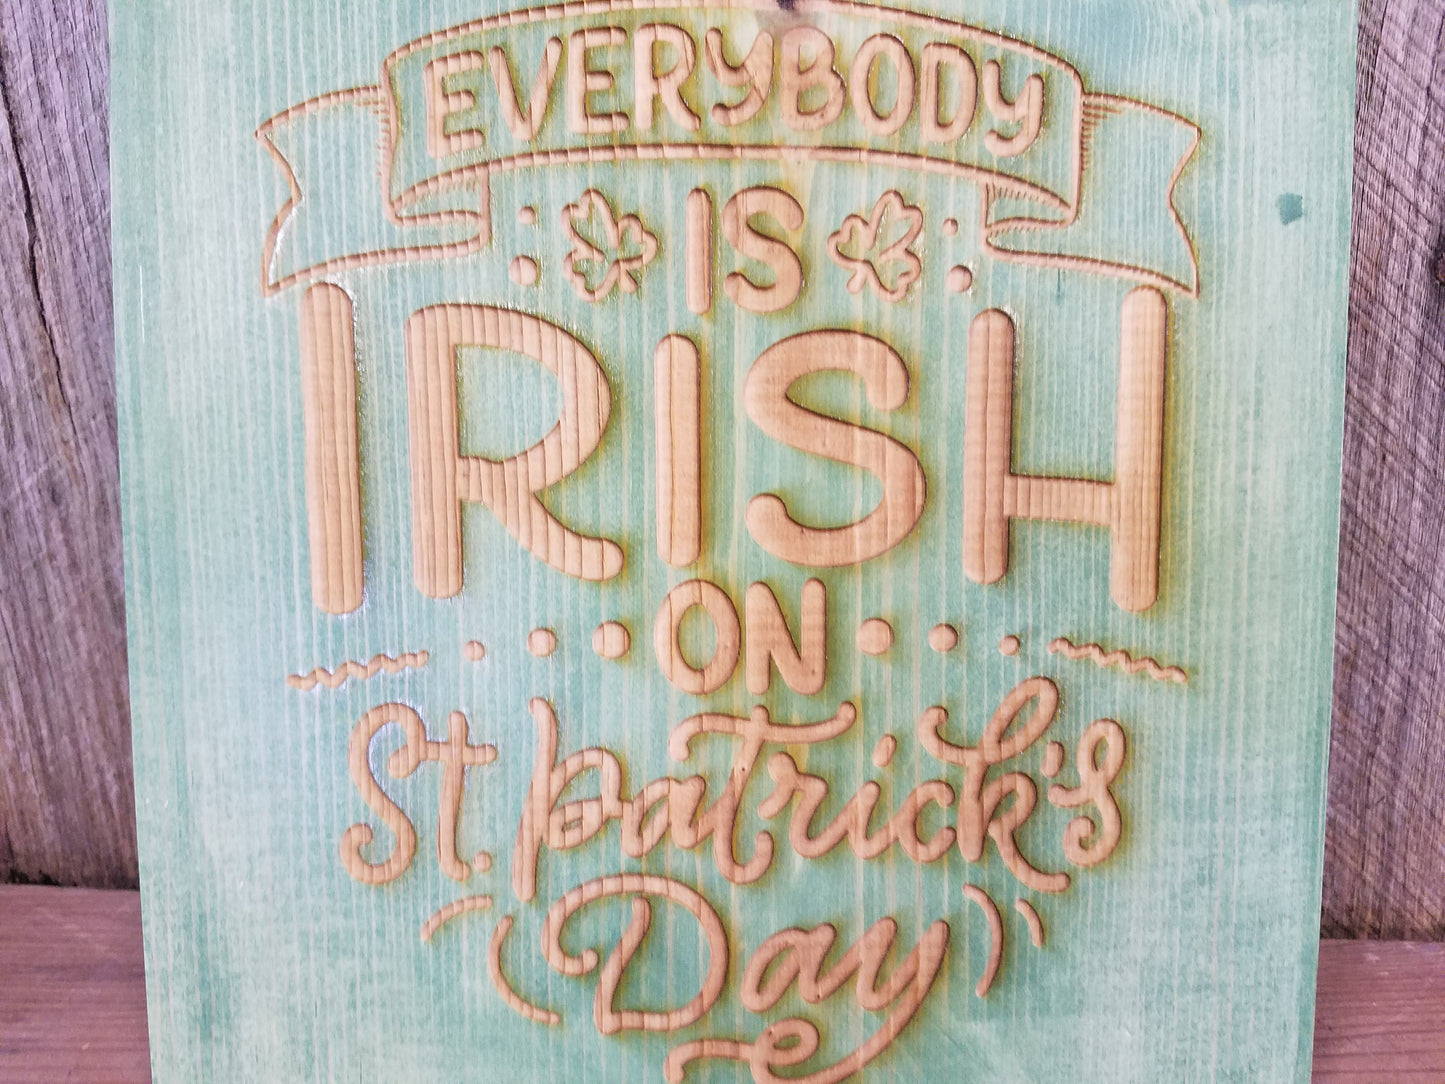 Everybody is Irish on St. Patrick's Day, Irish, St Pattys Day, Hard wood, Engraving, Green, Decoration, Decor, Gift, Sign